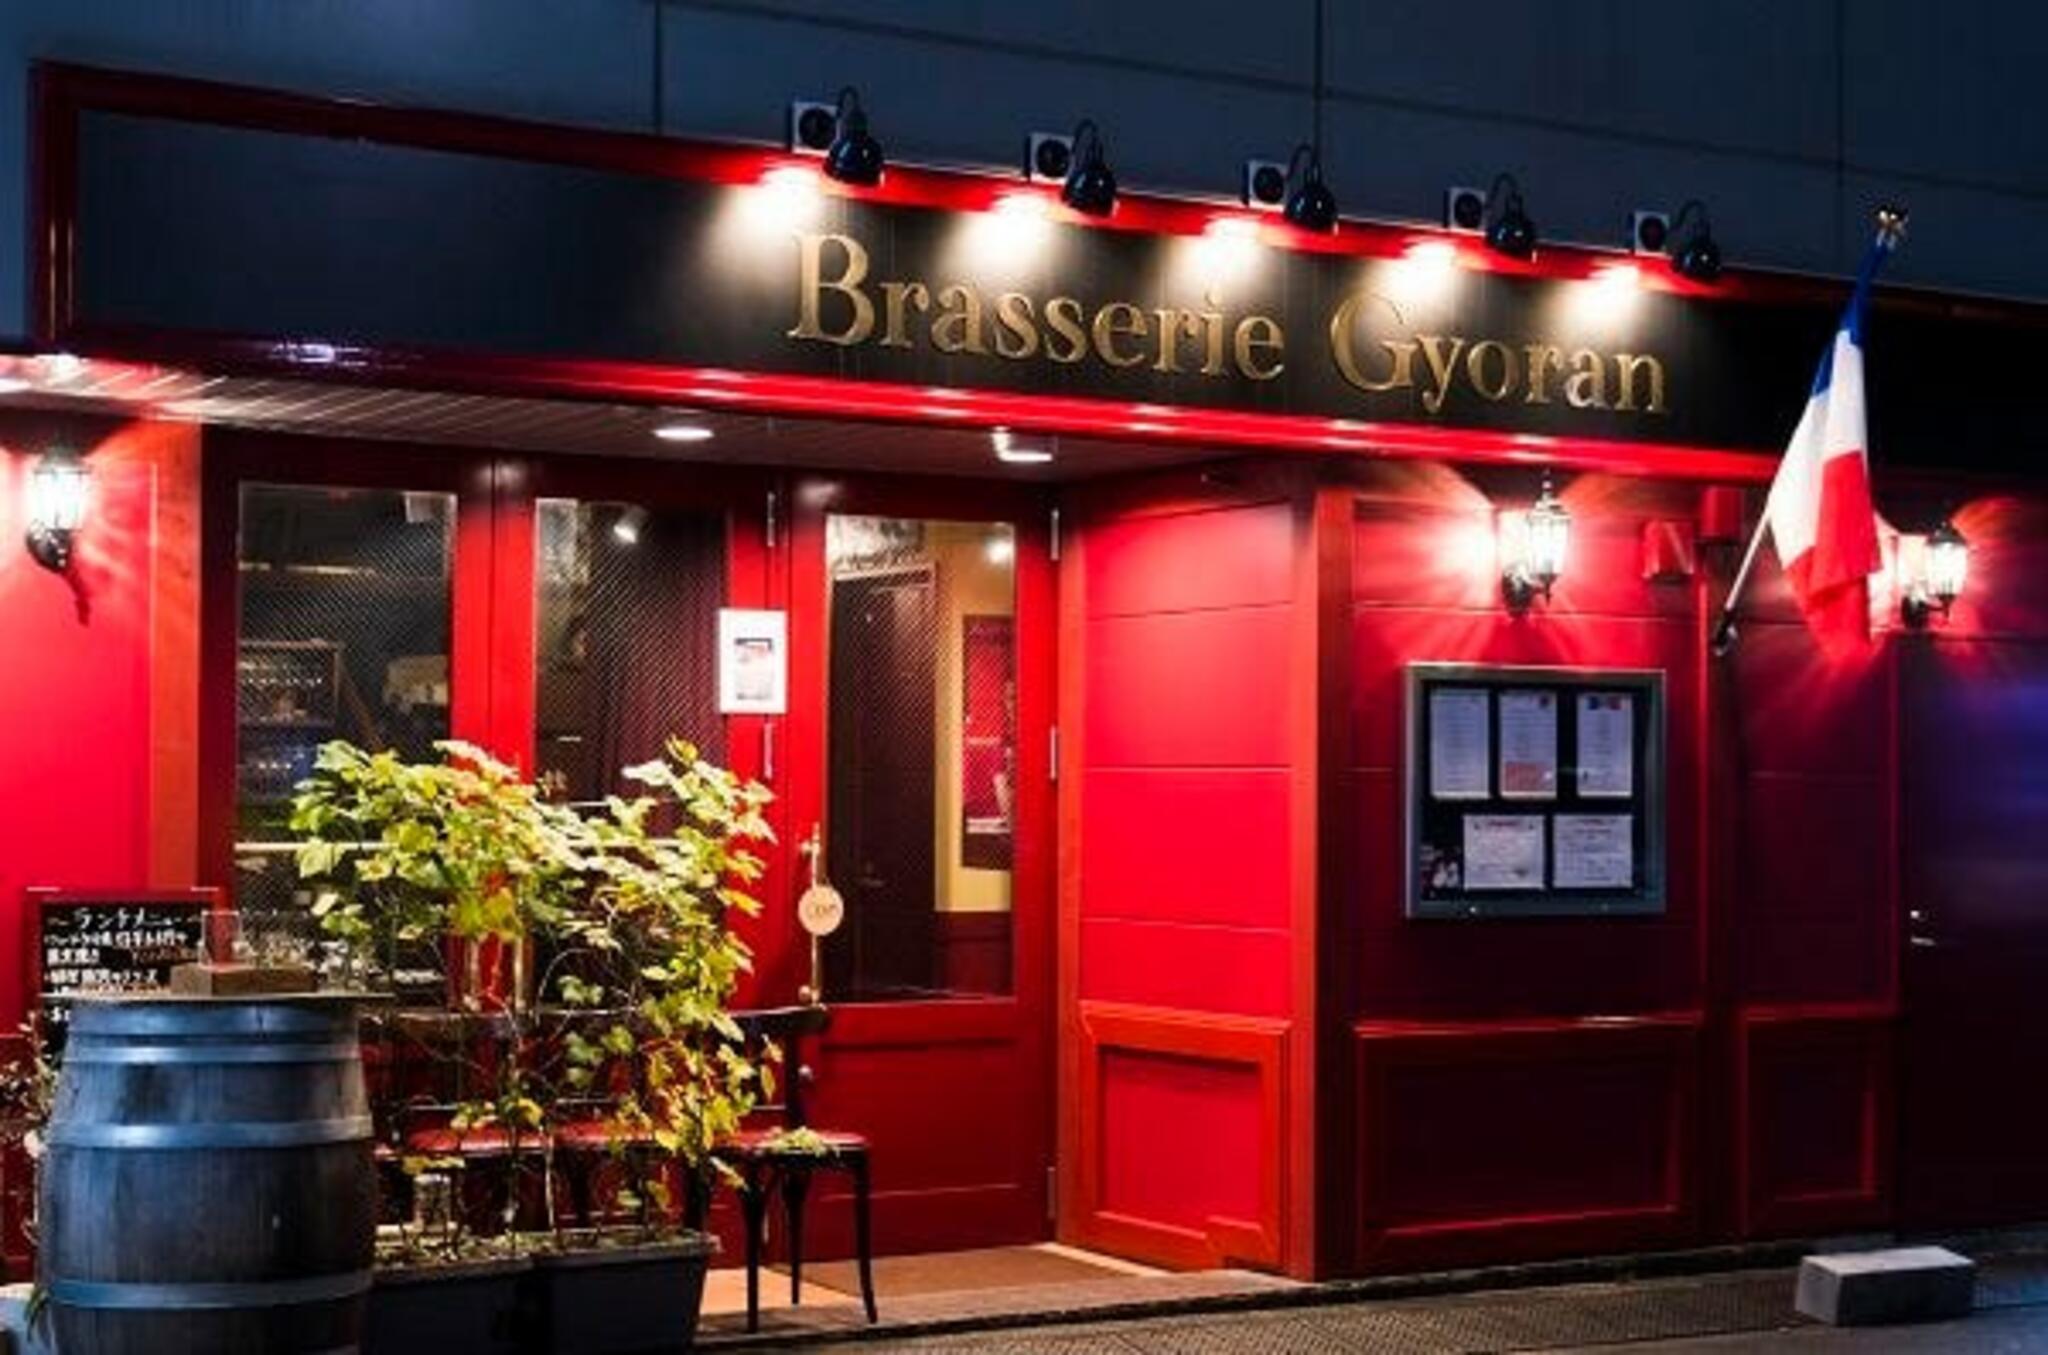 Brasserie Gyoranの代表写真2